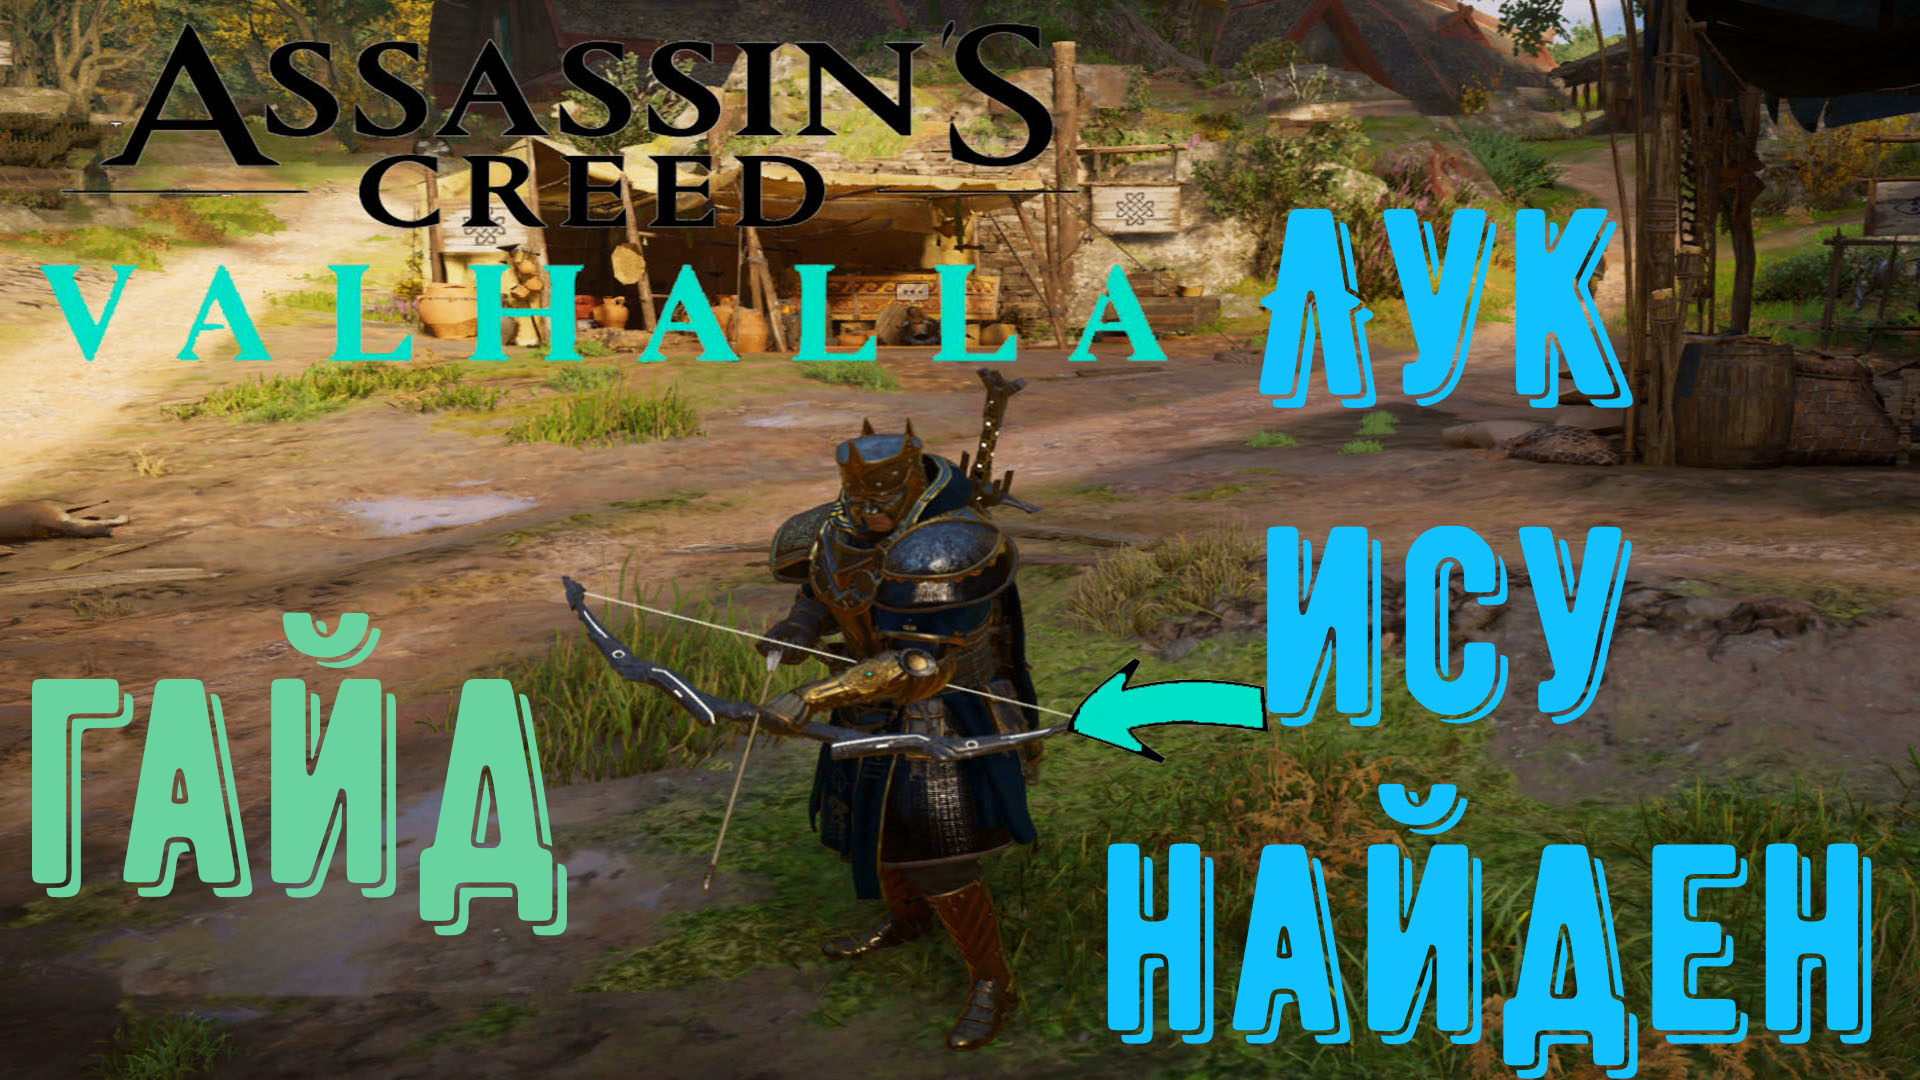 Гайд: Как найти лук нодена в Assassins Creed Valhalla